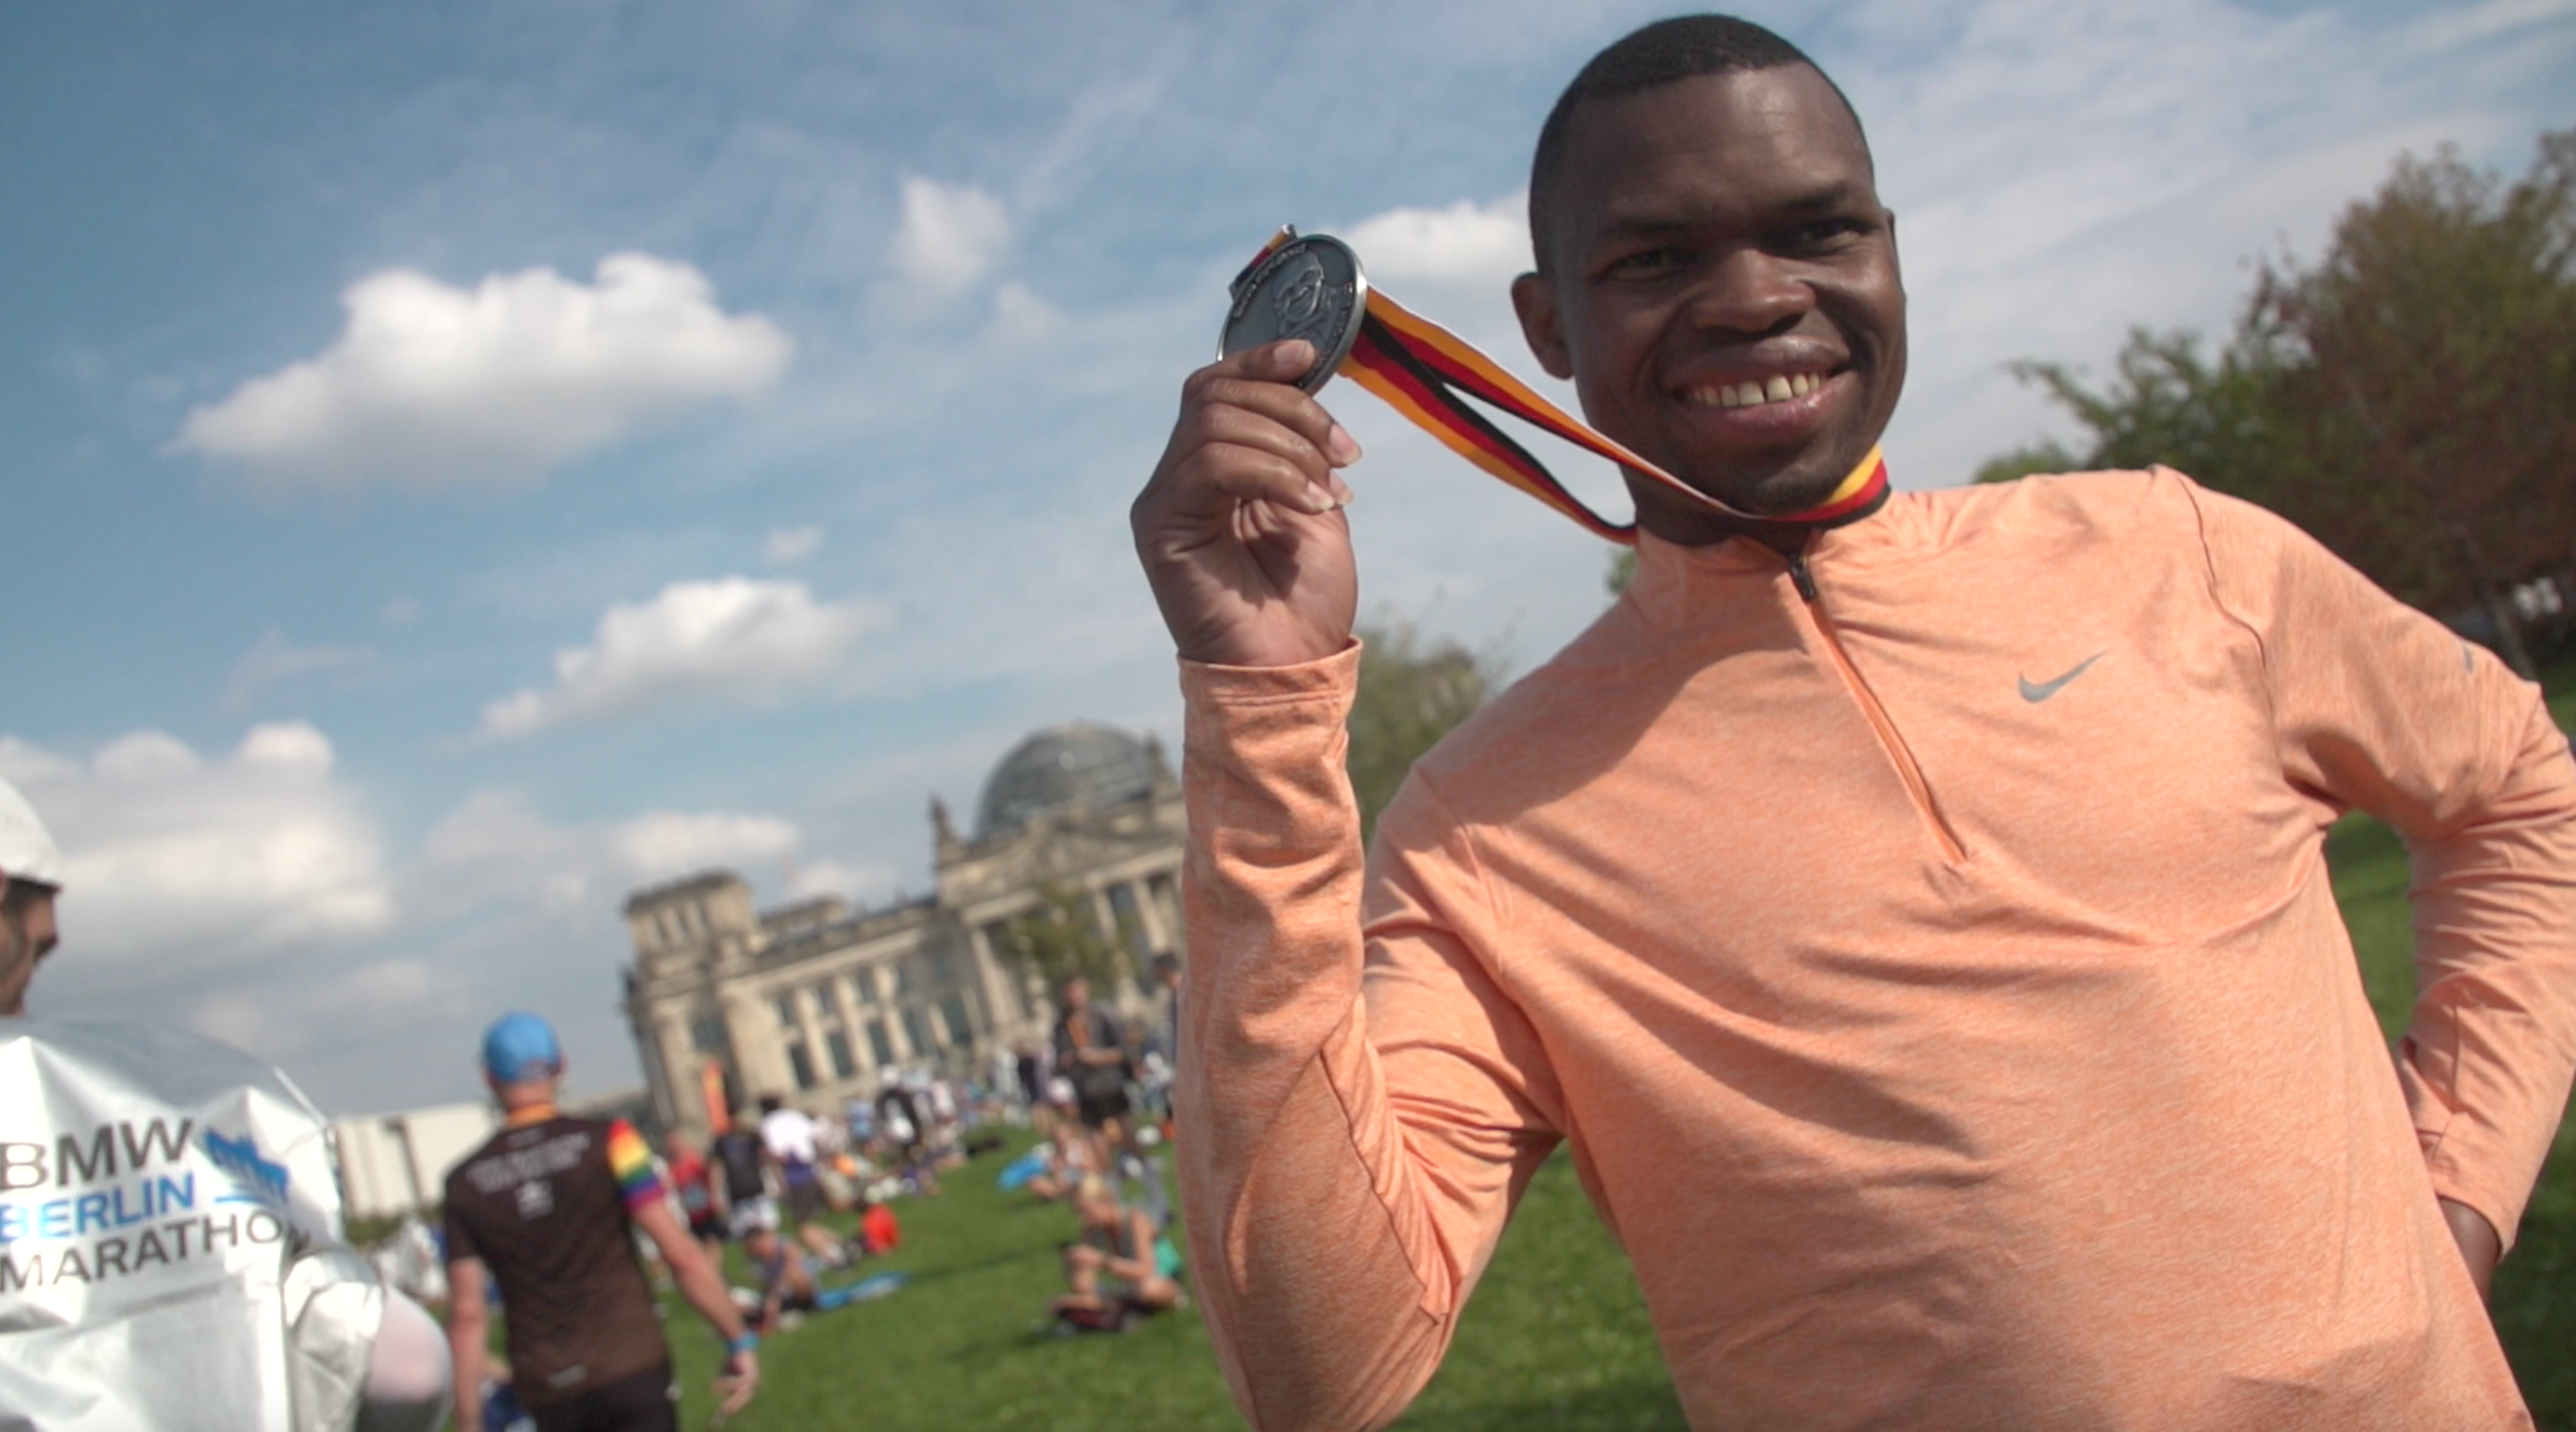 Strong sign for inclusion: Nyasha Derera completes Berlin Marathon